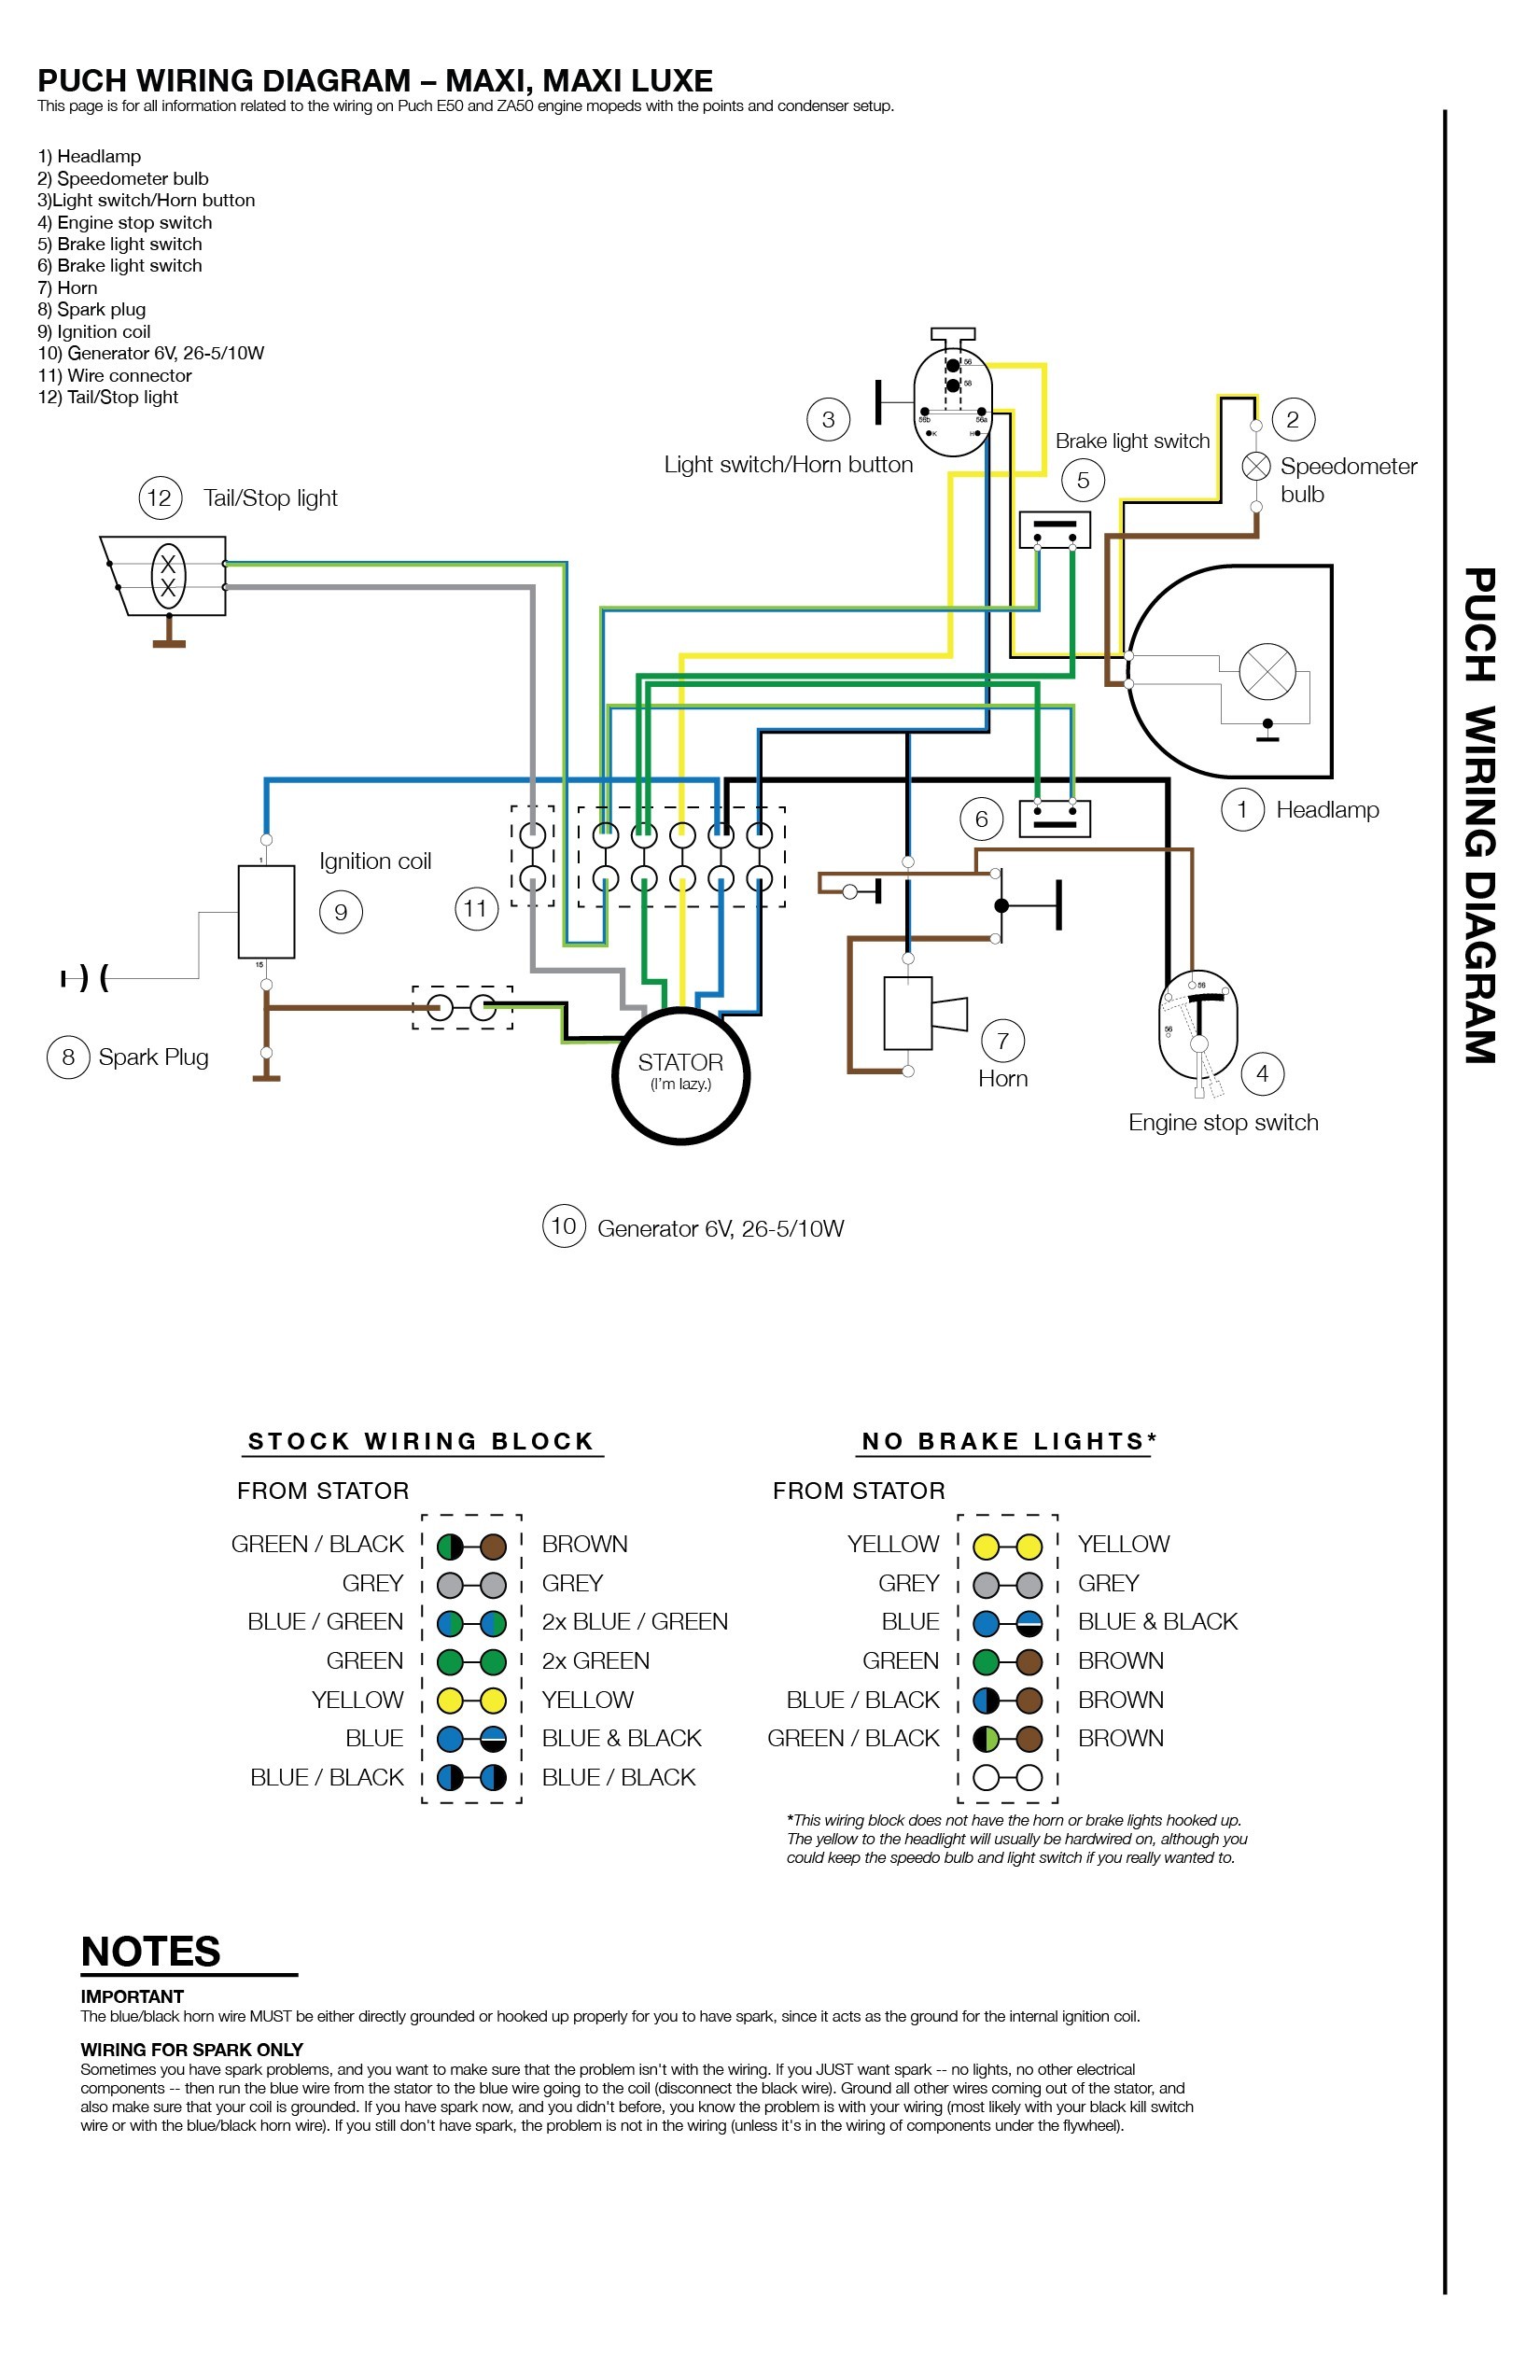 Wiring Diagram Plug Switch Light New Wiring Diagram Plug Switch Light Best Puch Wiring Moped